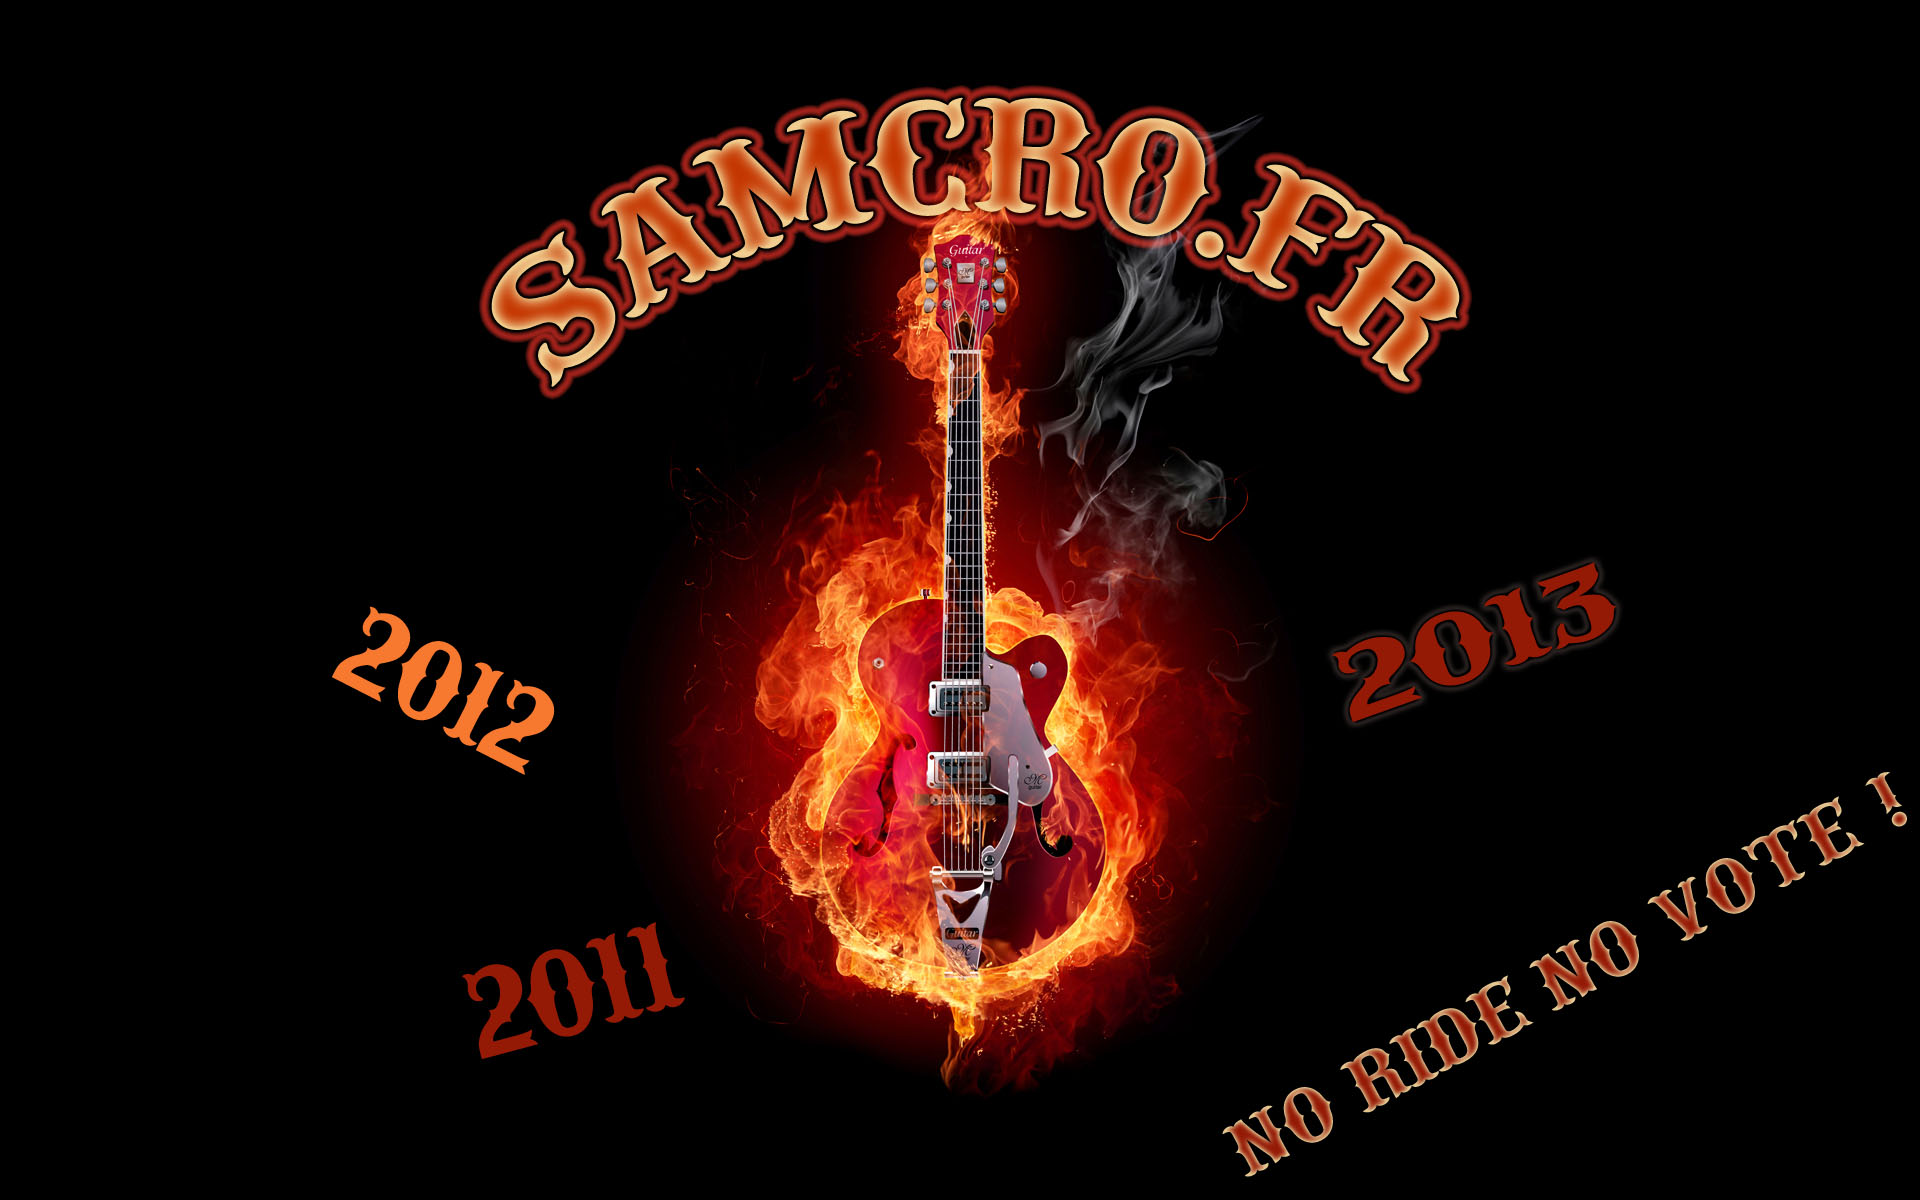 2011 . 2013 samcro.fr samcro SAMCRO.FR